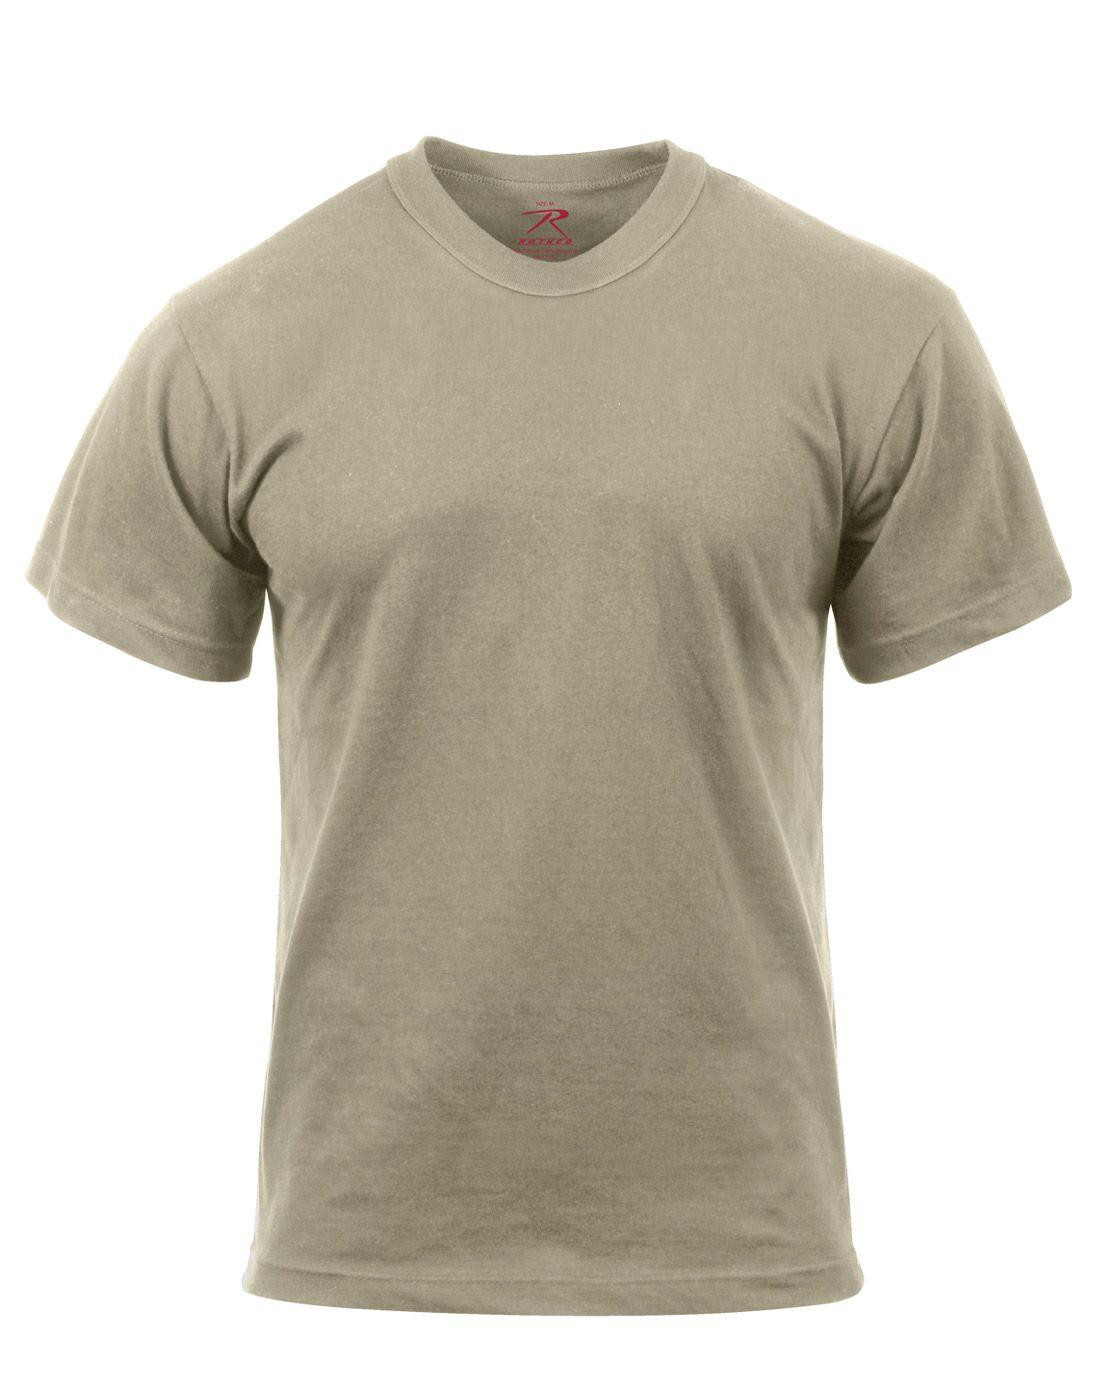 Se Rothco Svedtransporterende T-shirt (Sand, M) hos Army Star